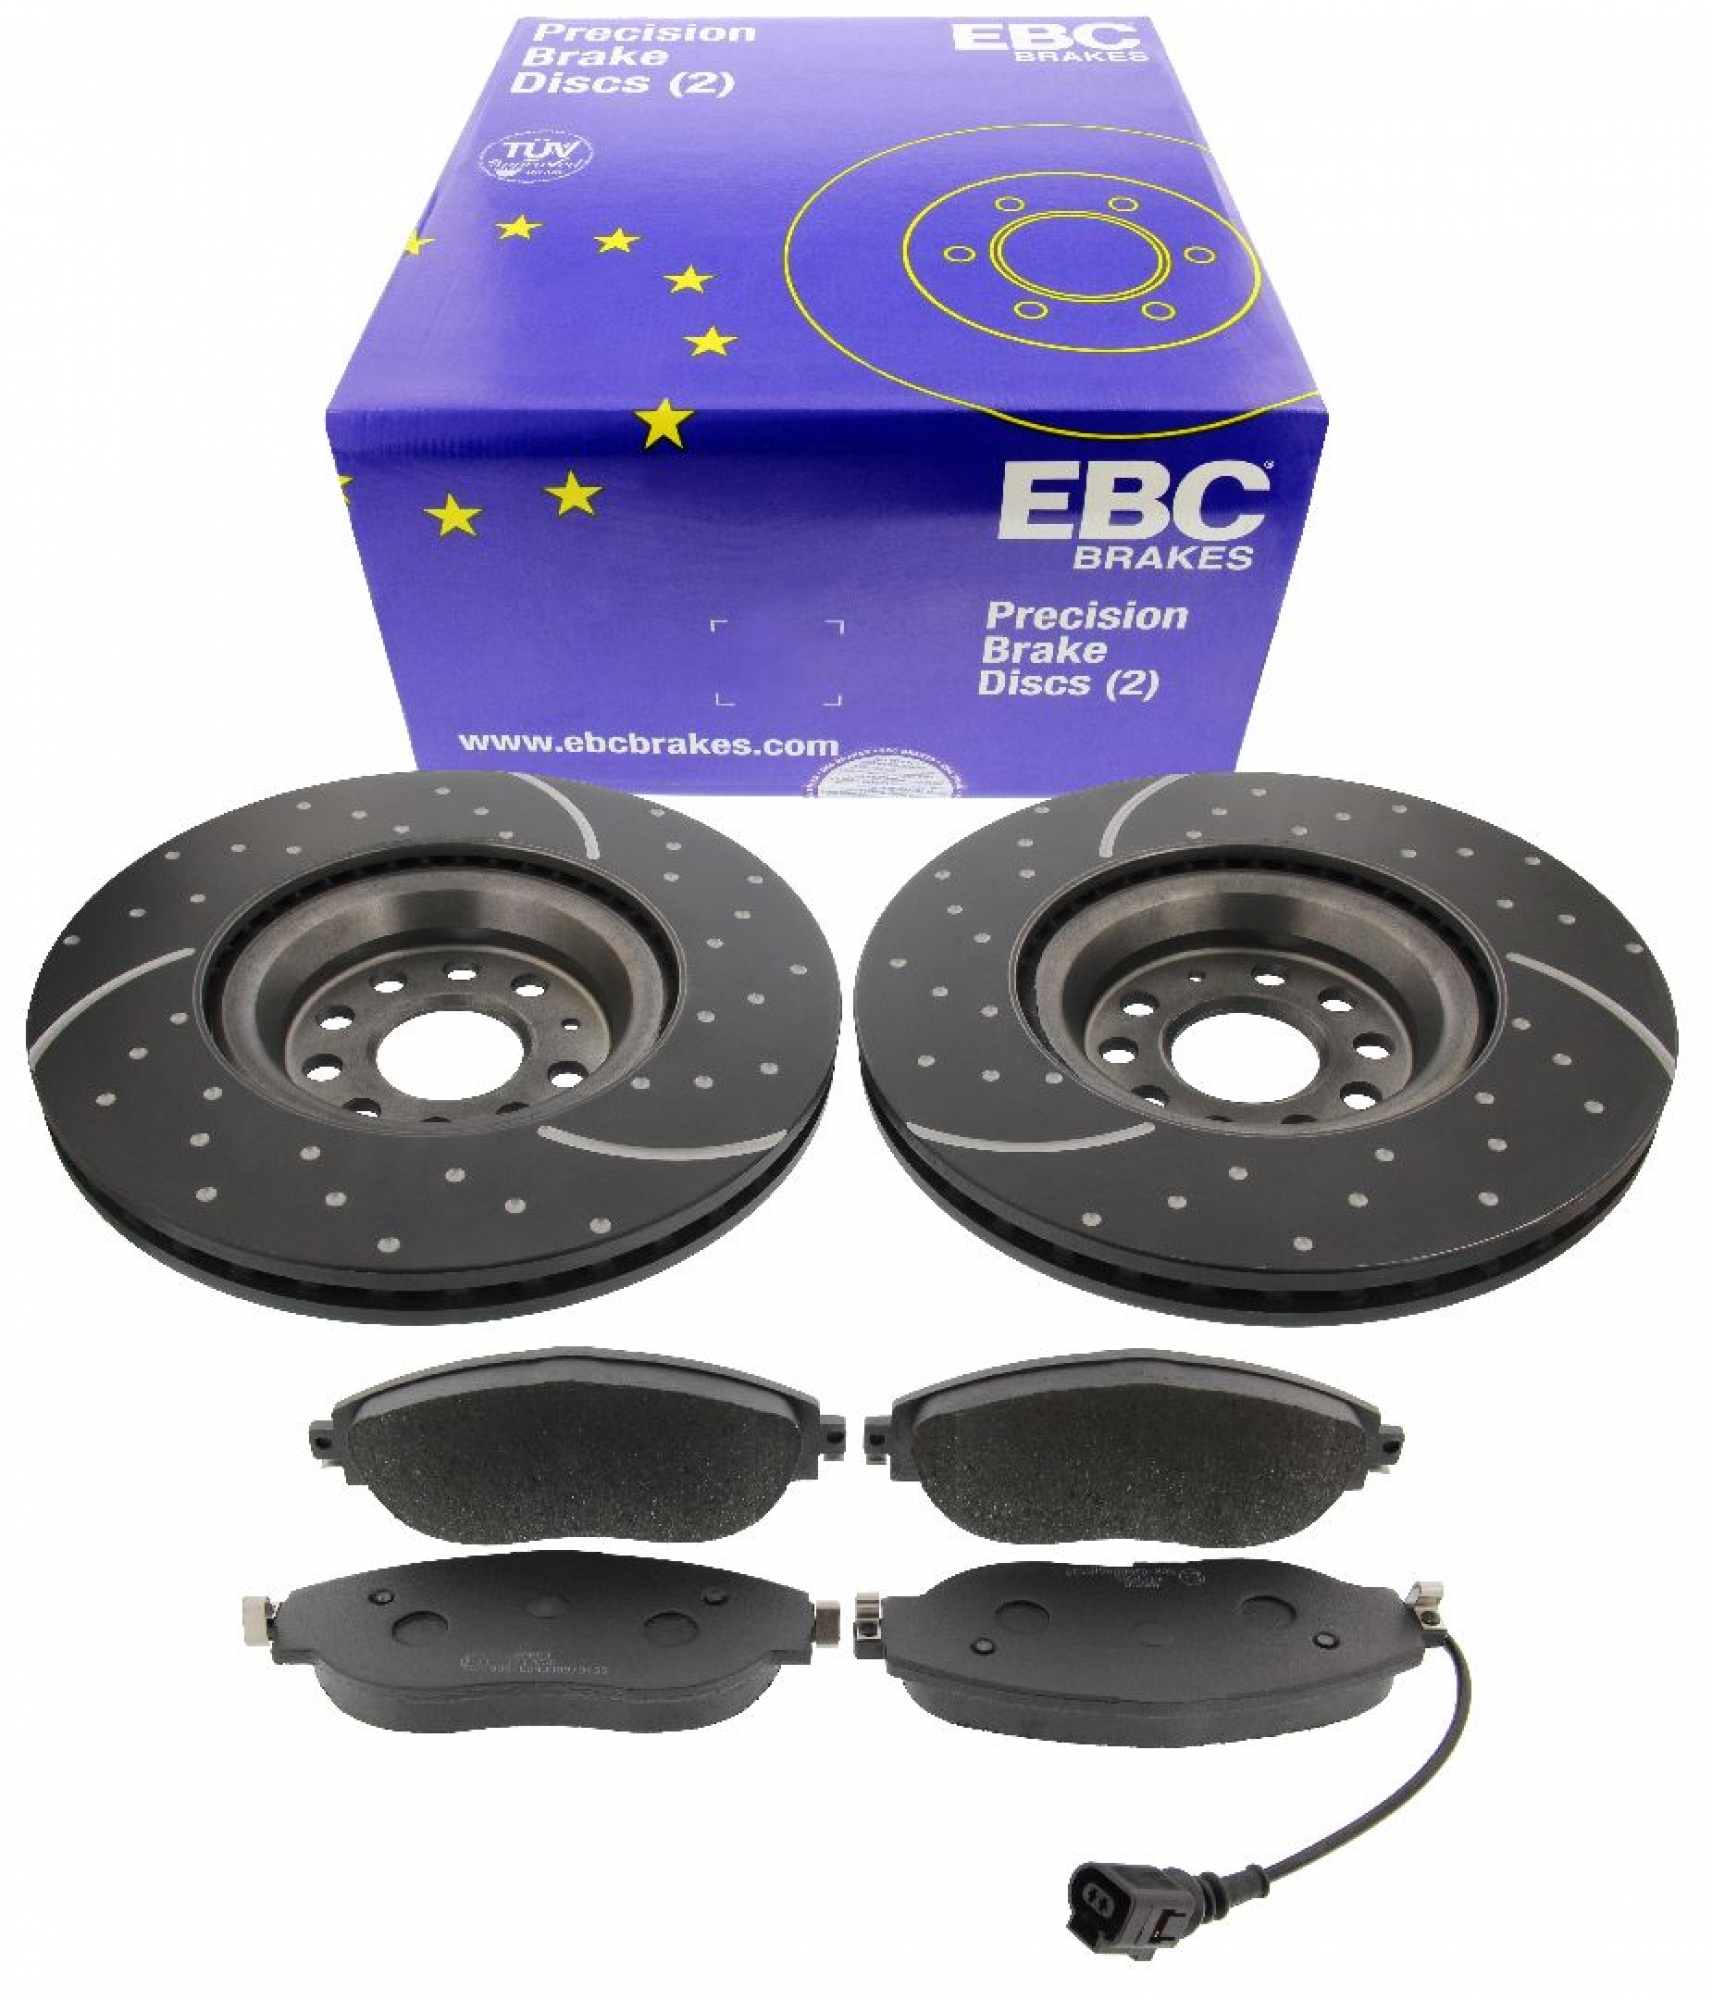 EBC-Bremsensatz, Turbo Groove Disc Black + Bremsbeläge, Blackstuff, Achssatz, VA, Audi, Seat, Skoda, VW